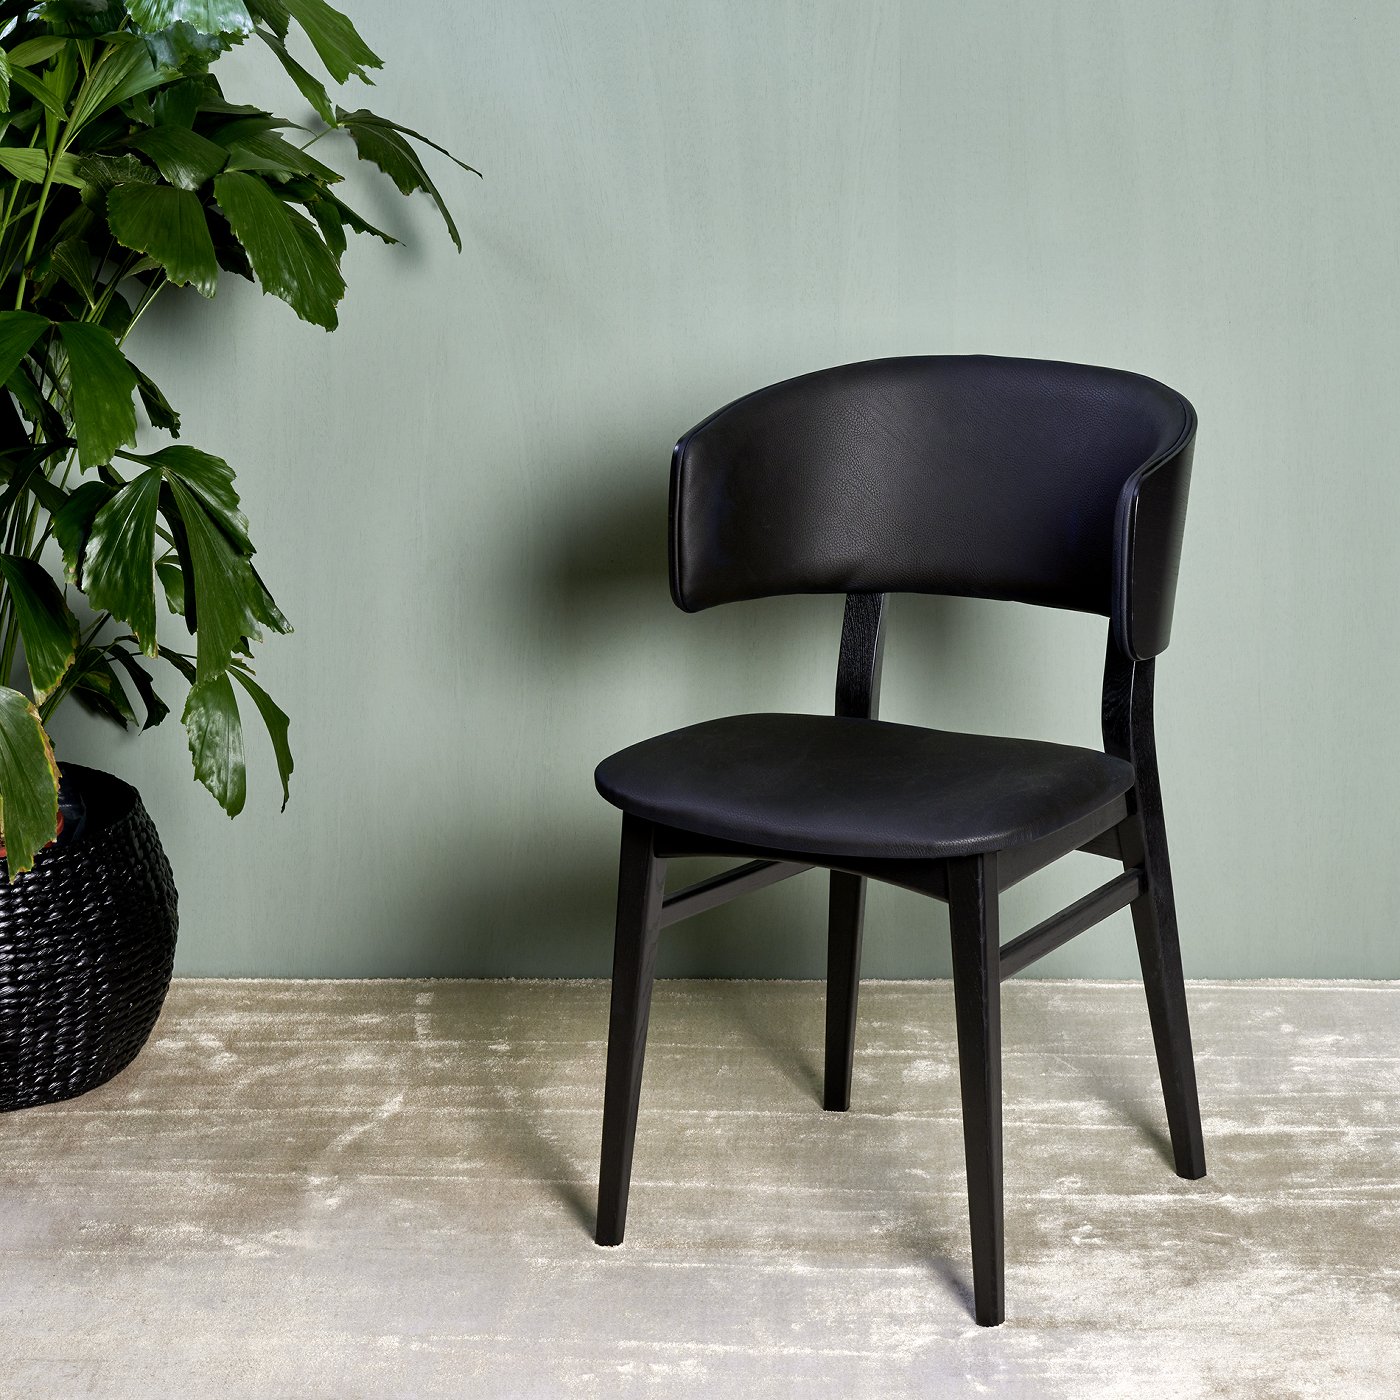 Leander Stuhl Eiche massiv, schwarz gebeizt, lackiert, 50x55cm H 82 cm , SB  45 cm, ST 42 cm, SH 48 cm | Tabletts